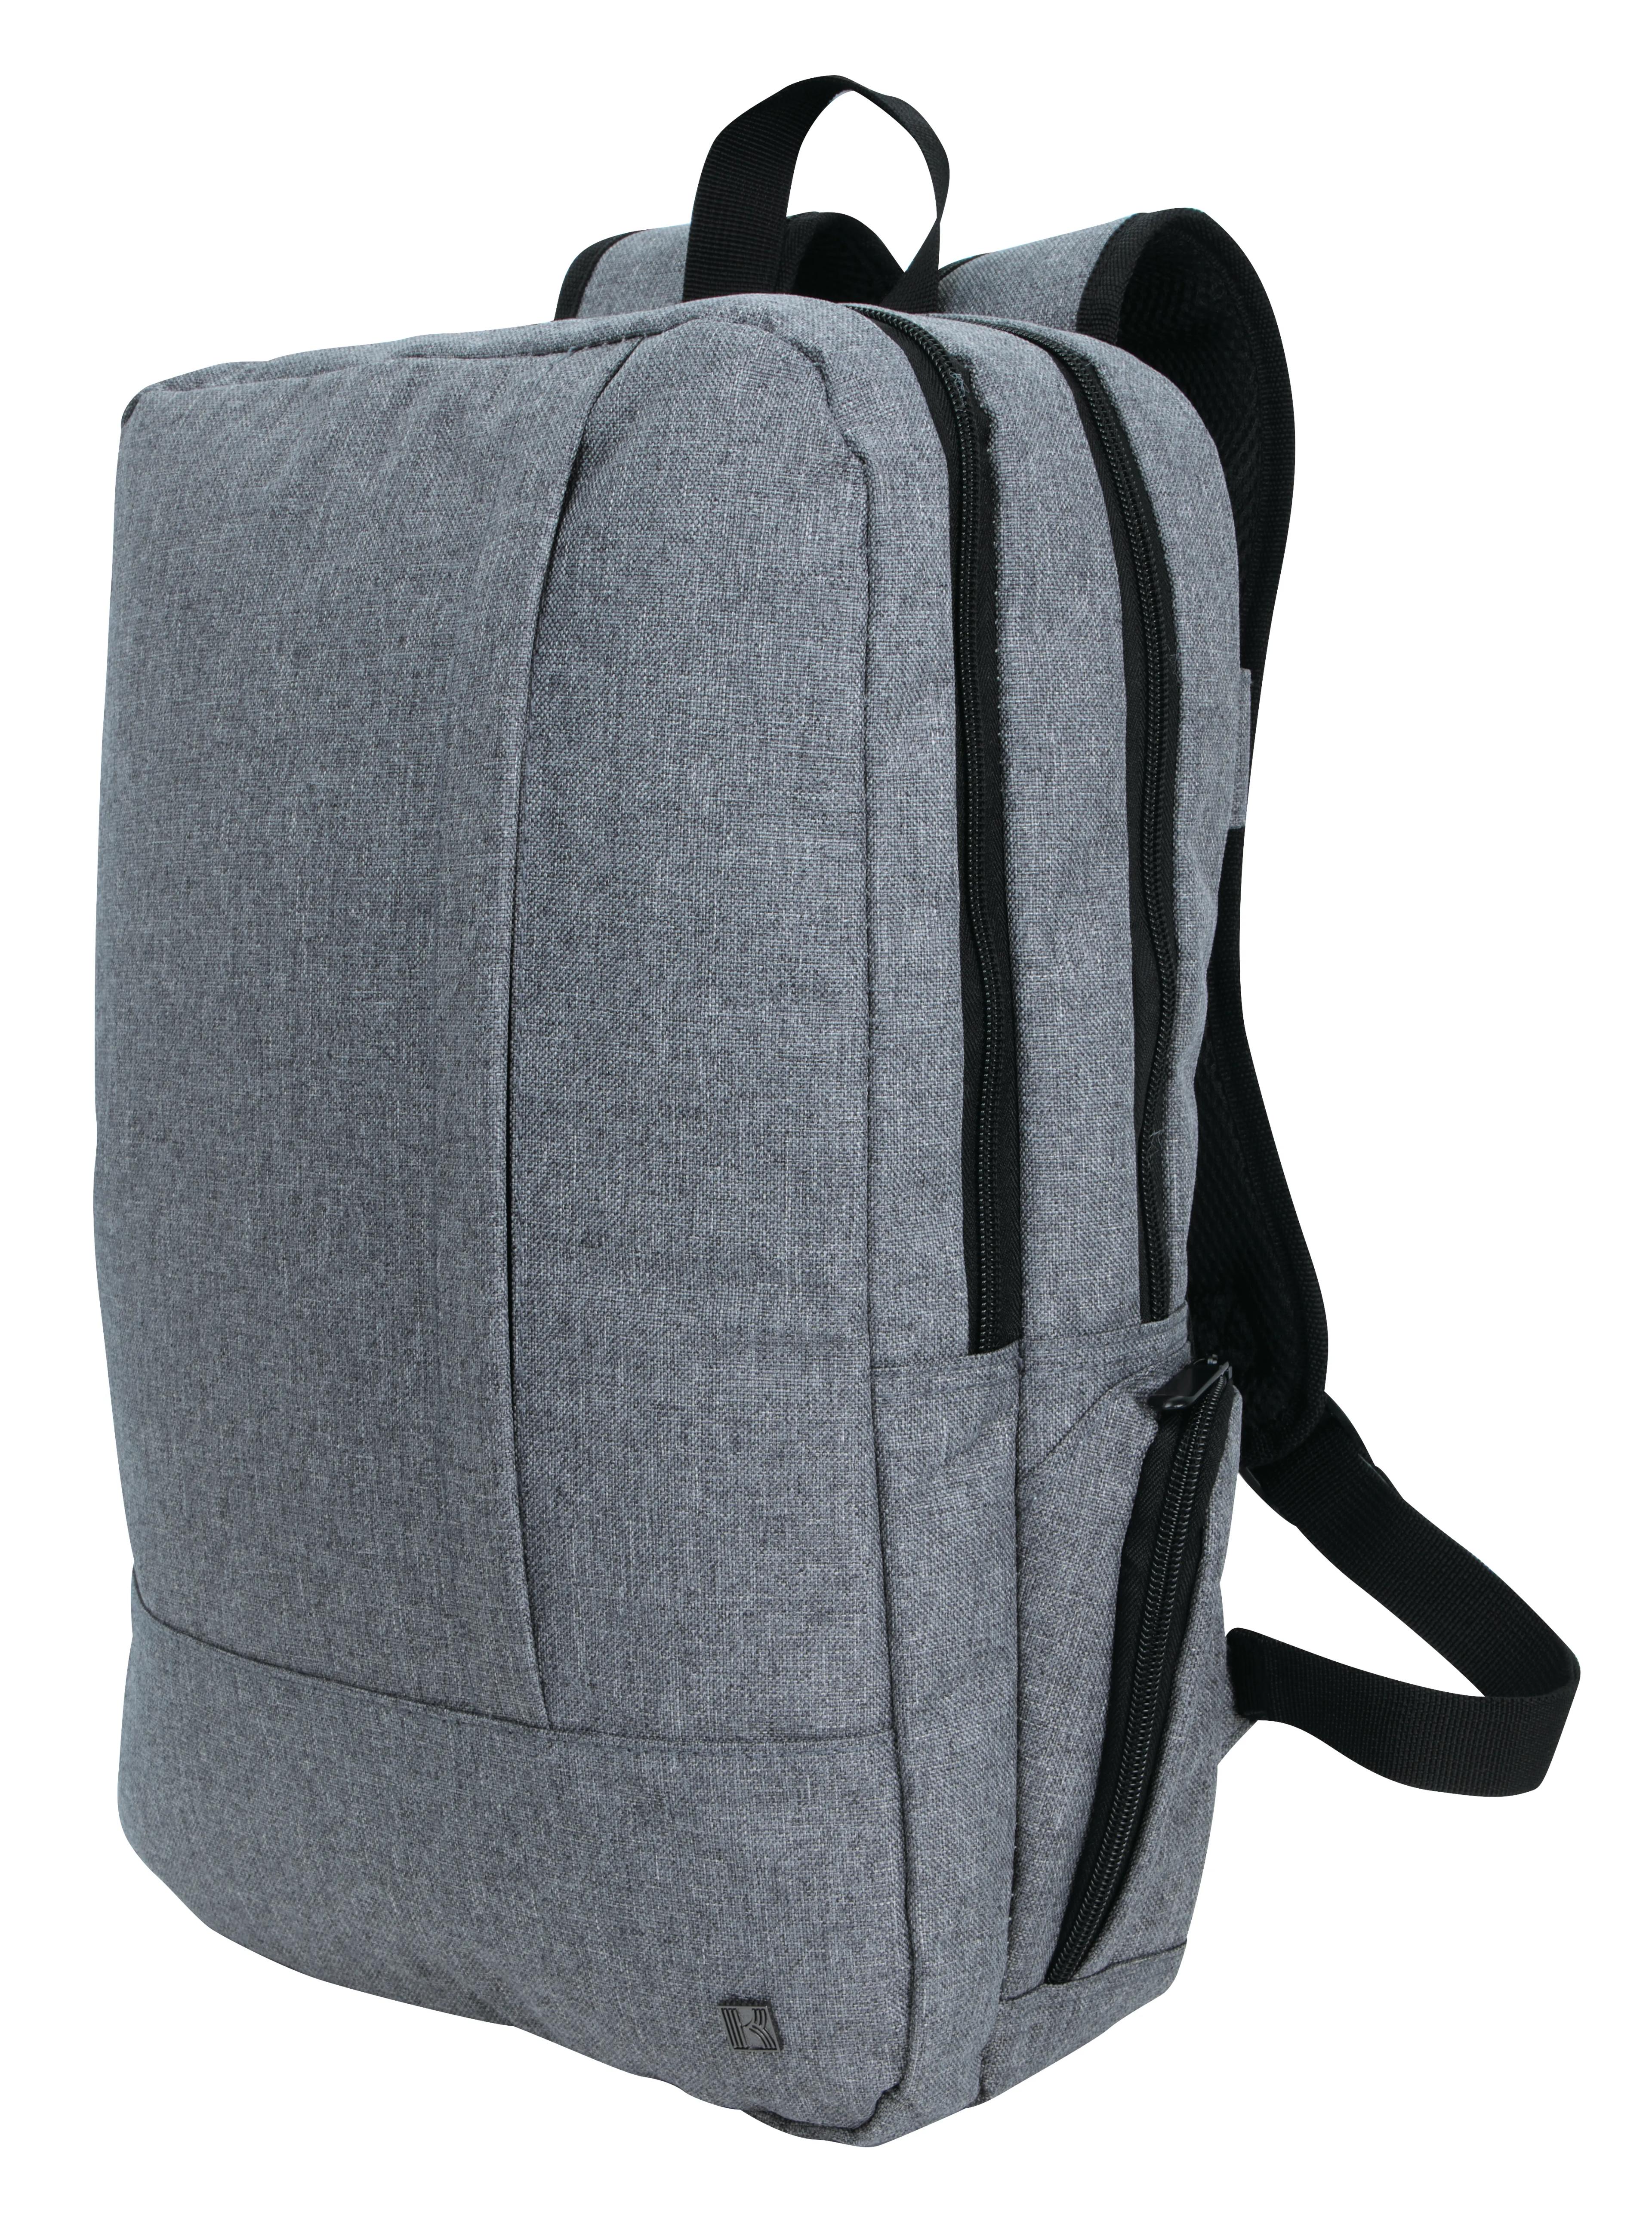 KAPSTON® Pierce Backpack 7 of 77